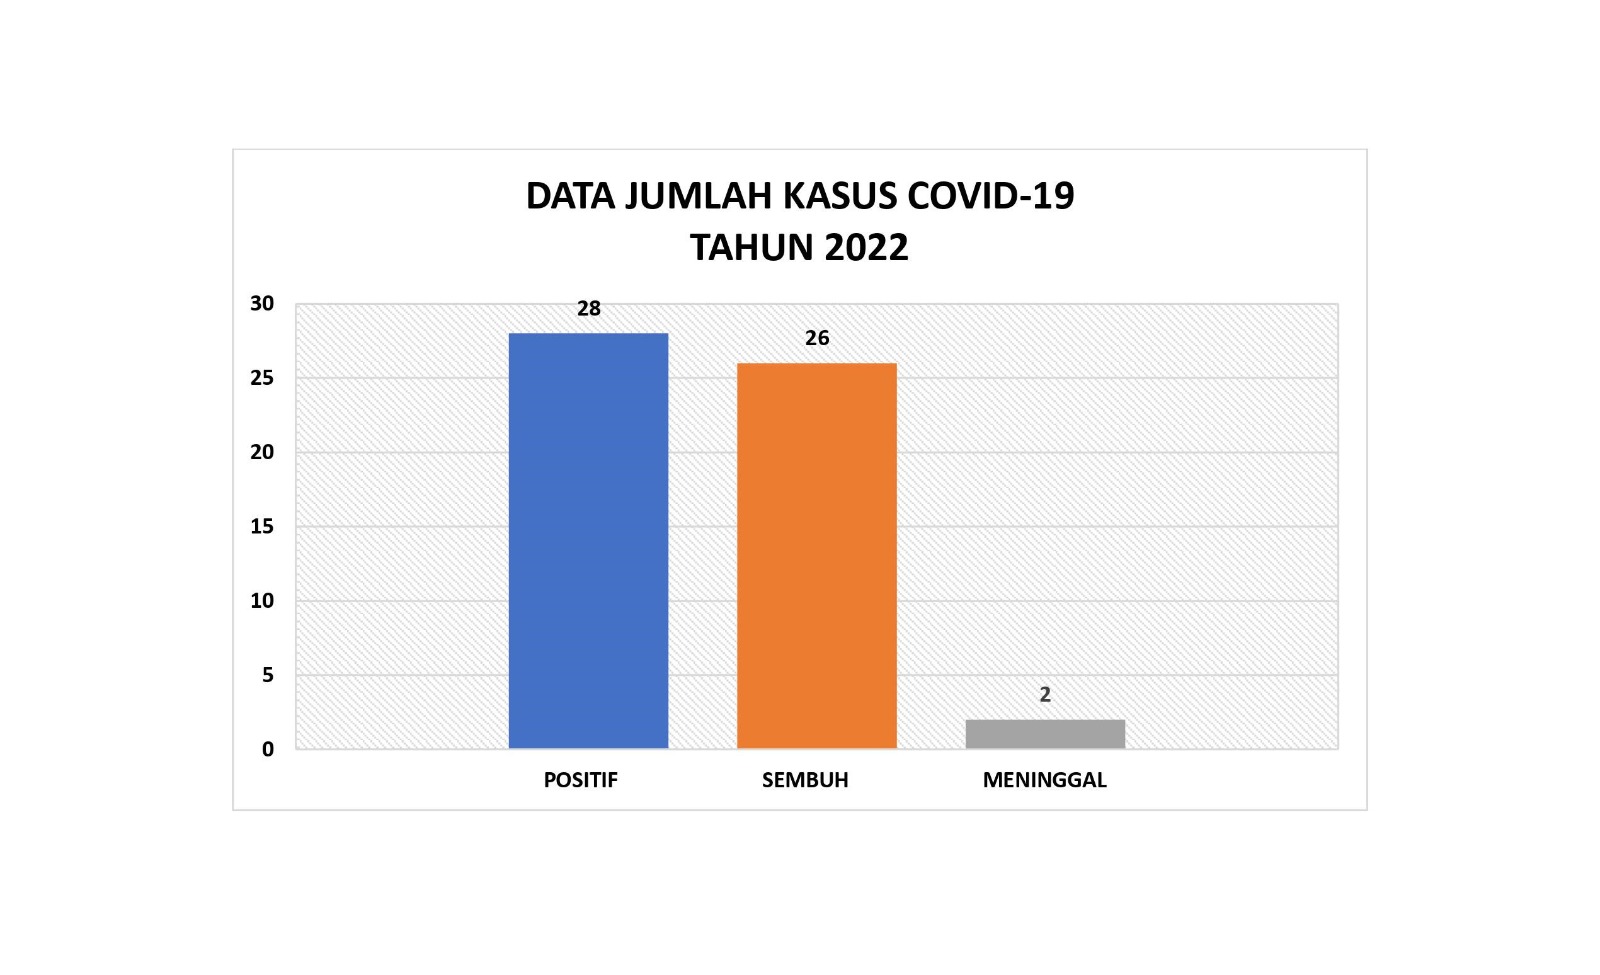 Data Jumlah Kasus COvid-19 Kalurahan Kulwaru